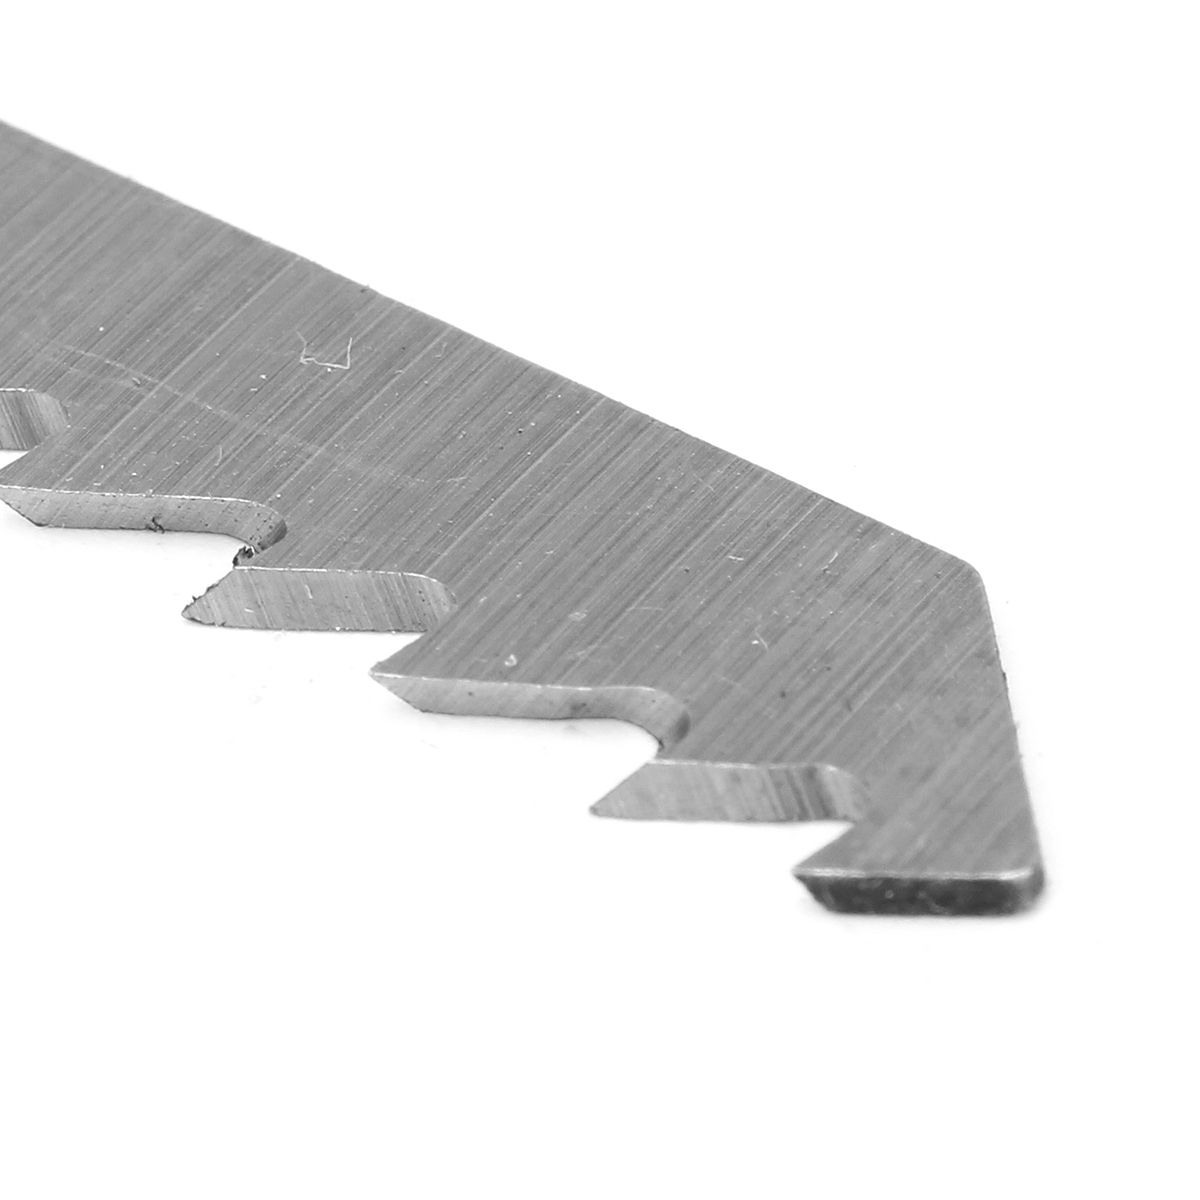 25pcs-T101D-T-Shank-HCS-Black-Jigsaw-Blades-Curve-Cuttingtools-For-Wood-Plastic-1140646